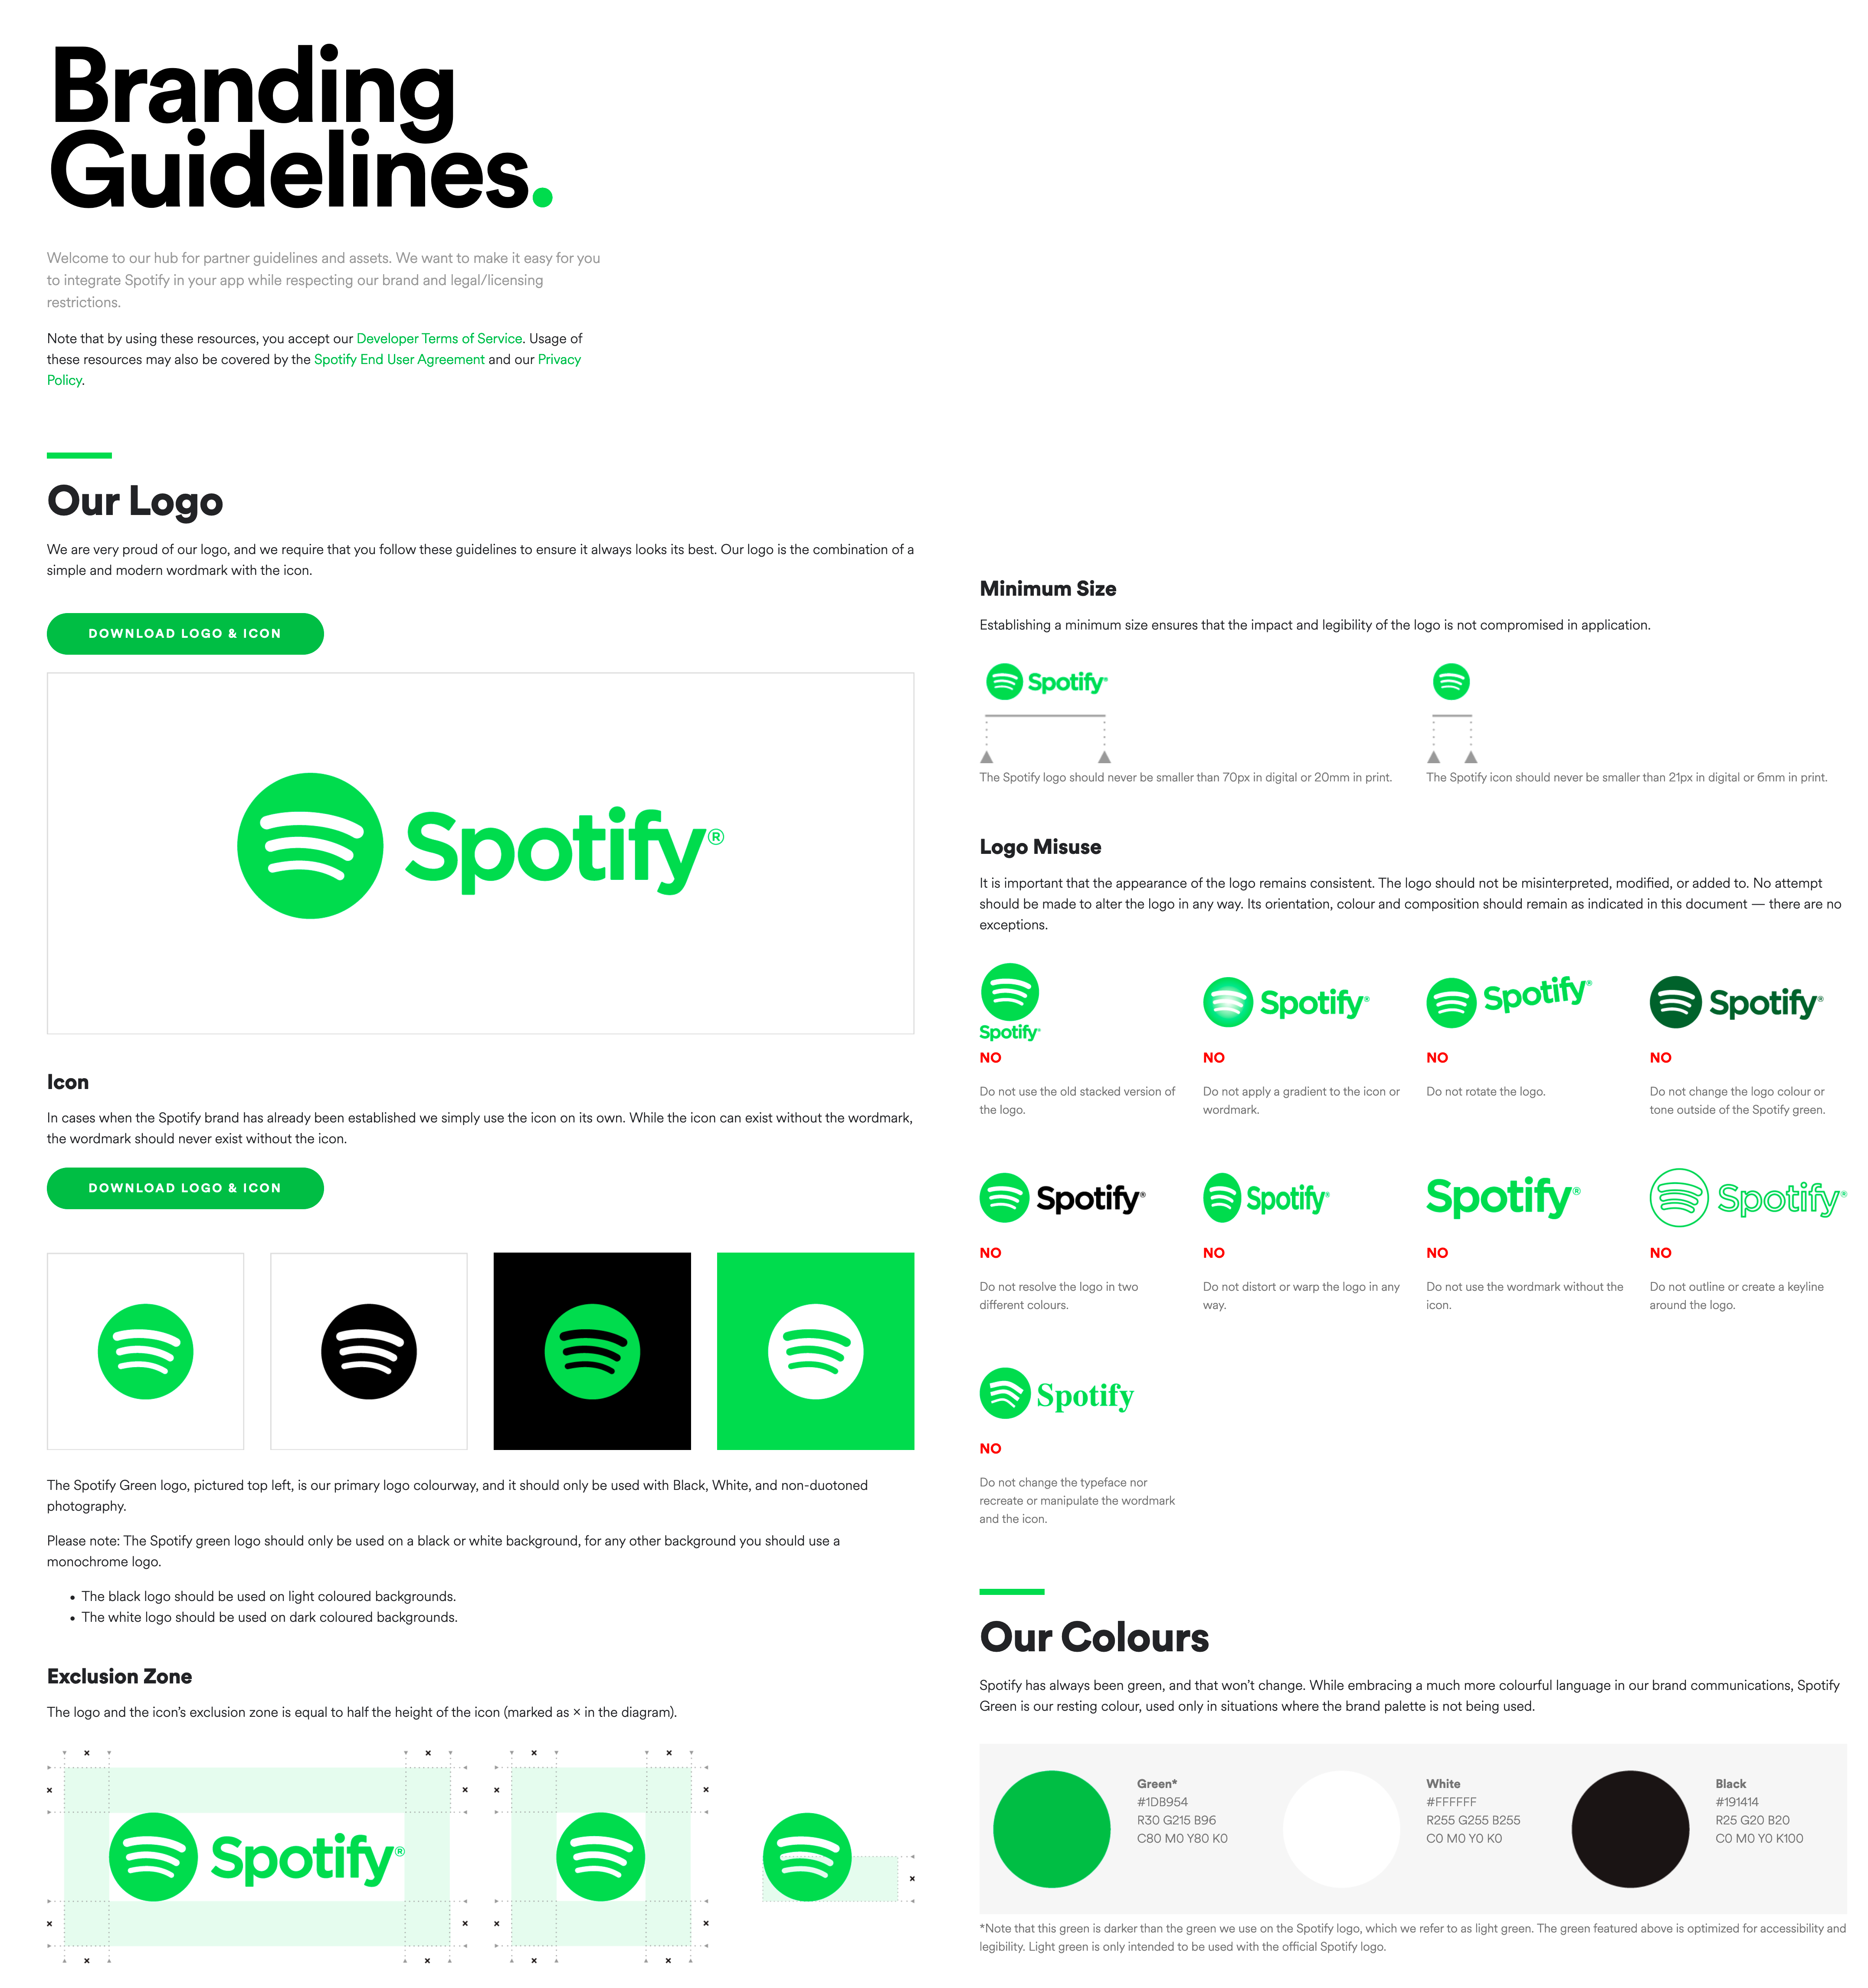 Spotify Branding Guidelines